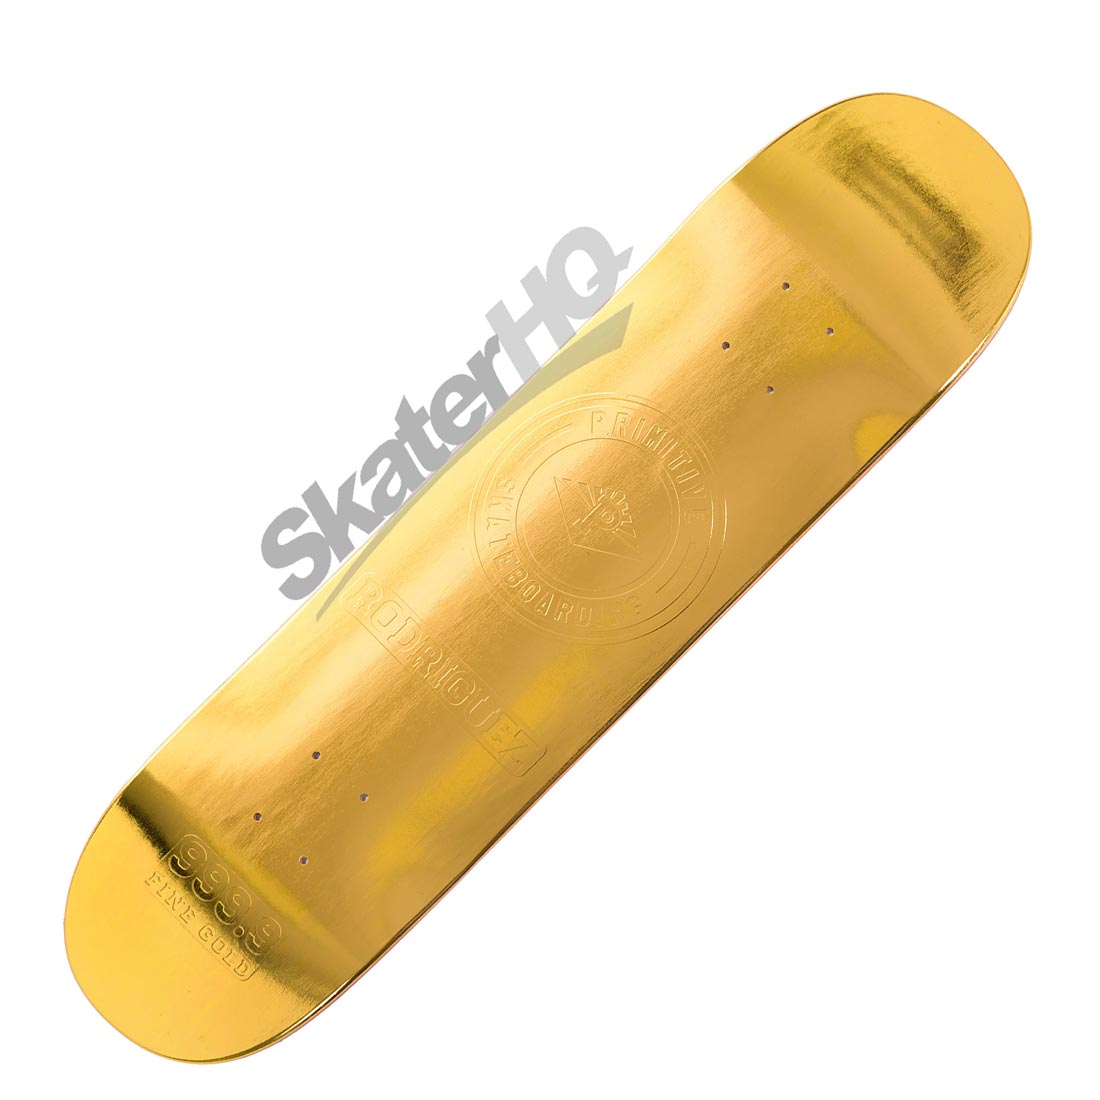 Primitive Gold Bar 7.8 Deck Skateboard Decks Modern Street